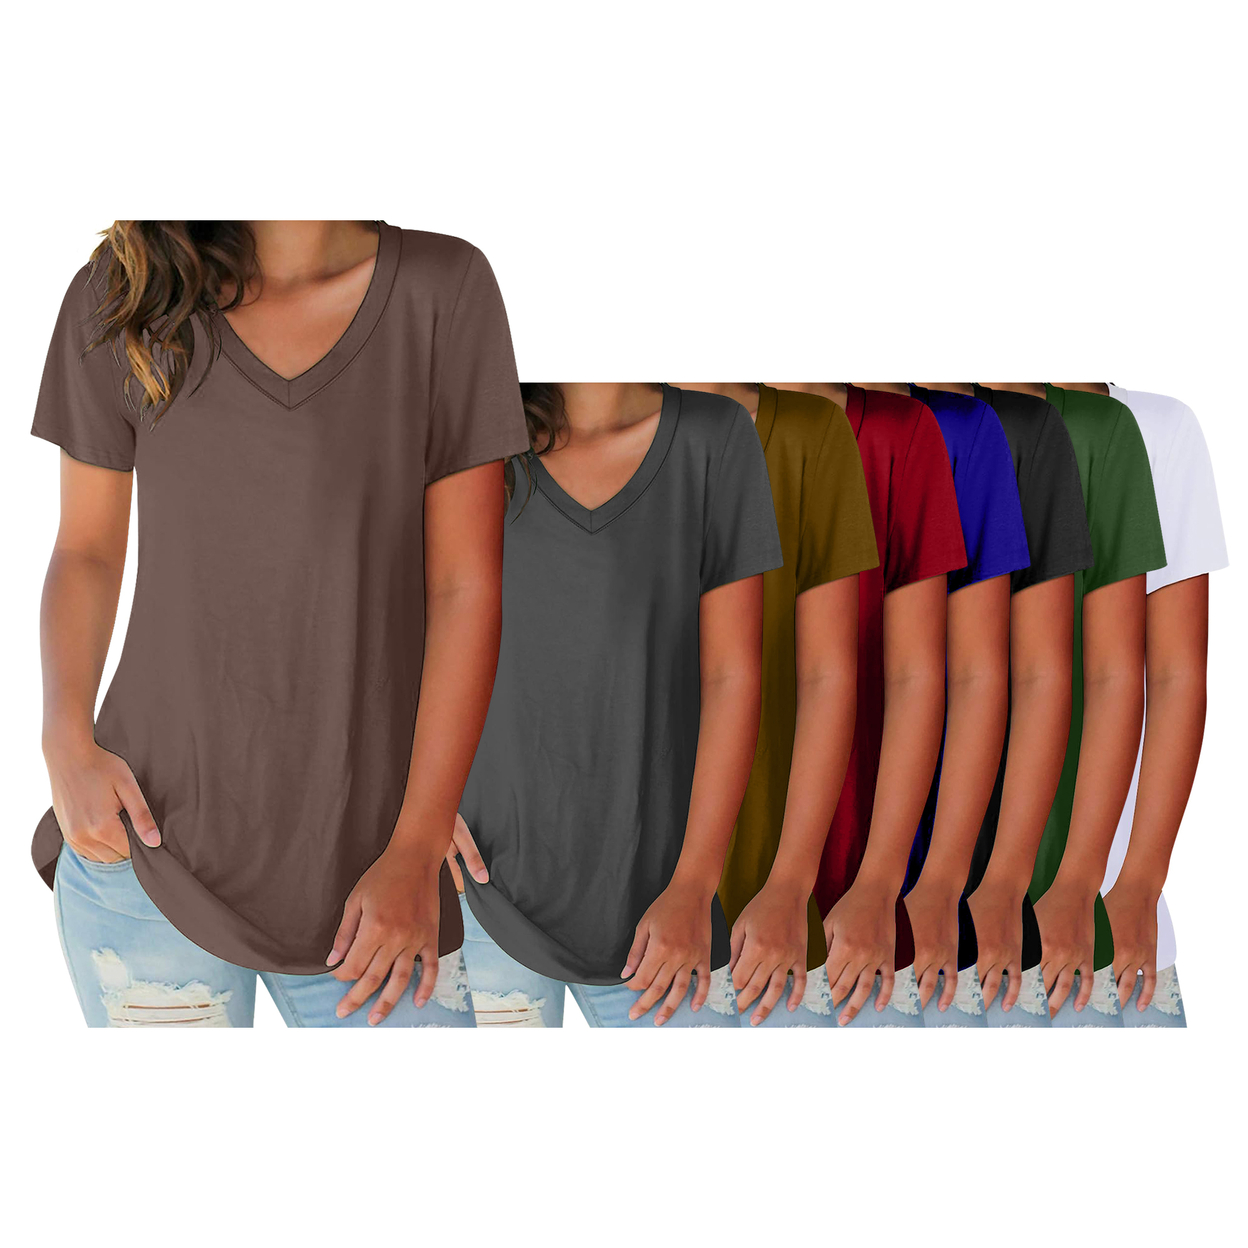 Women's Ultra-Soft Smooth Cotton Blend Basic V-Neck Short Sleeve Shirts - Black, Medium